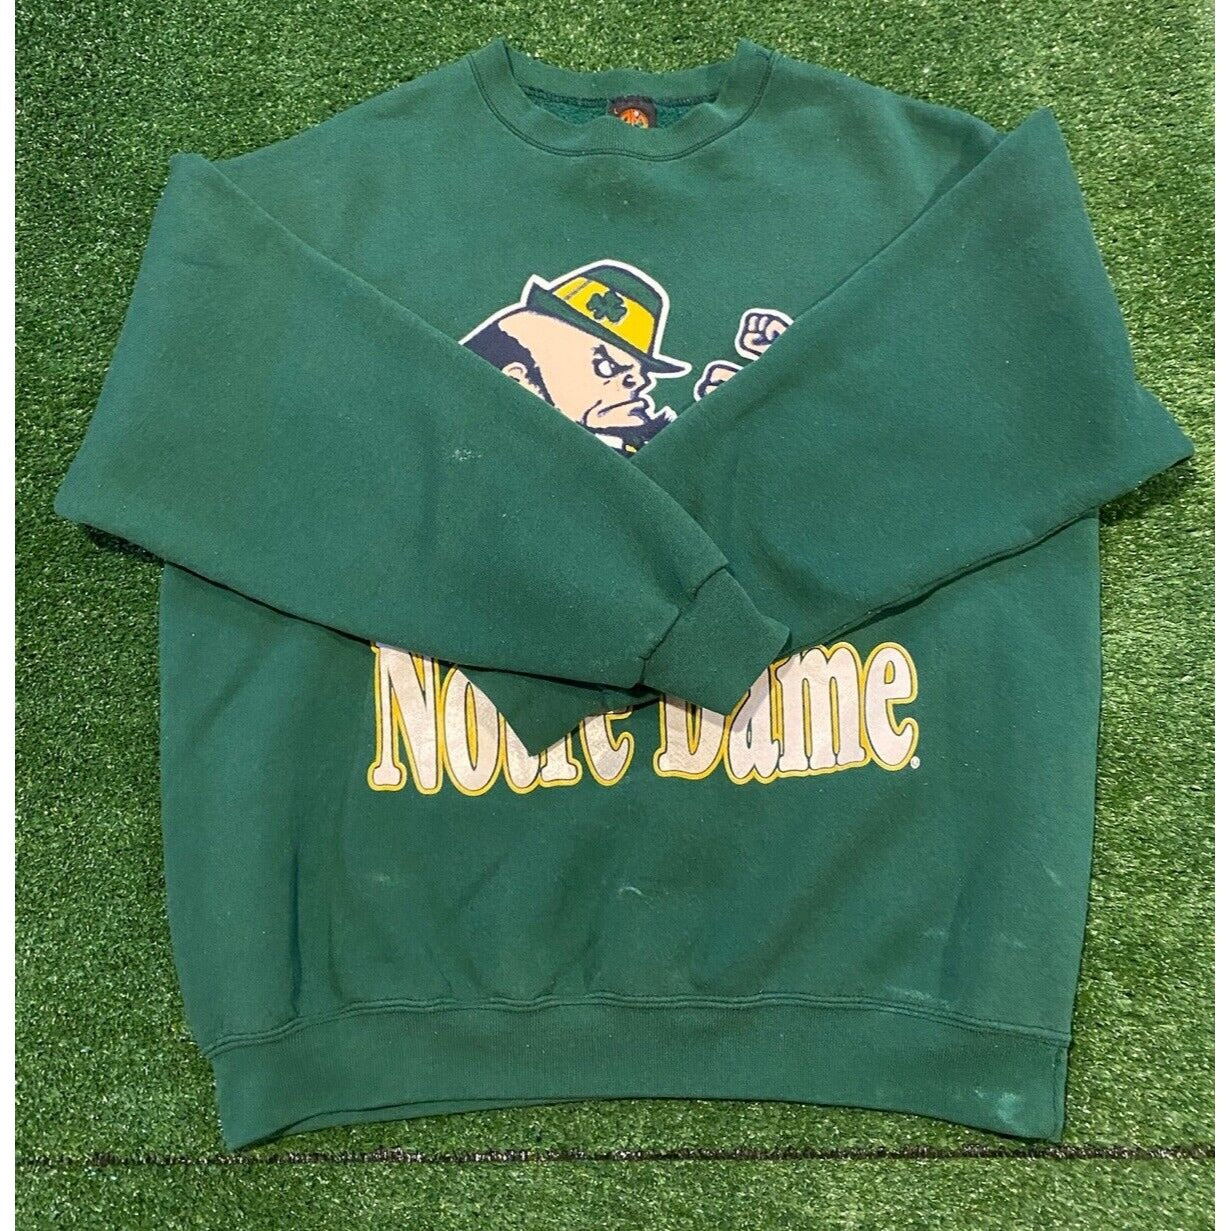 Vintage Notre Dame Fighting irish sweatshirt large green mens 90s football adult